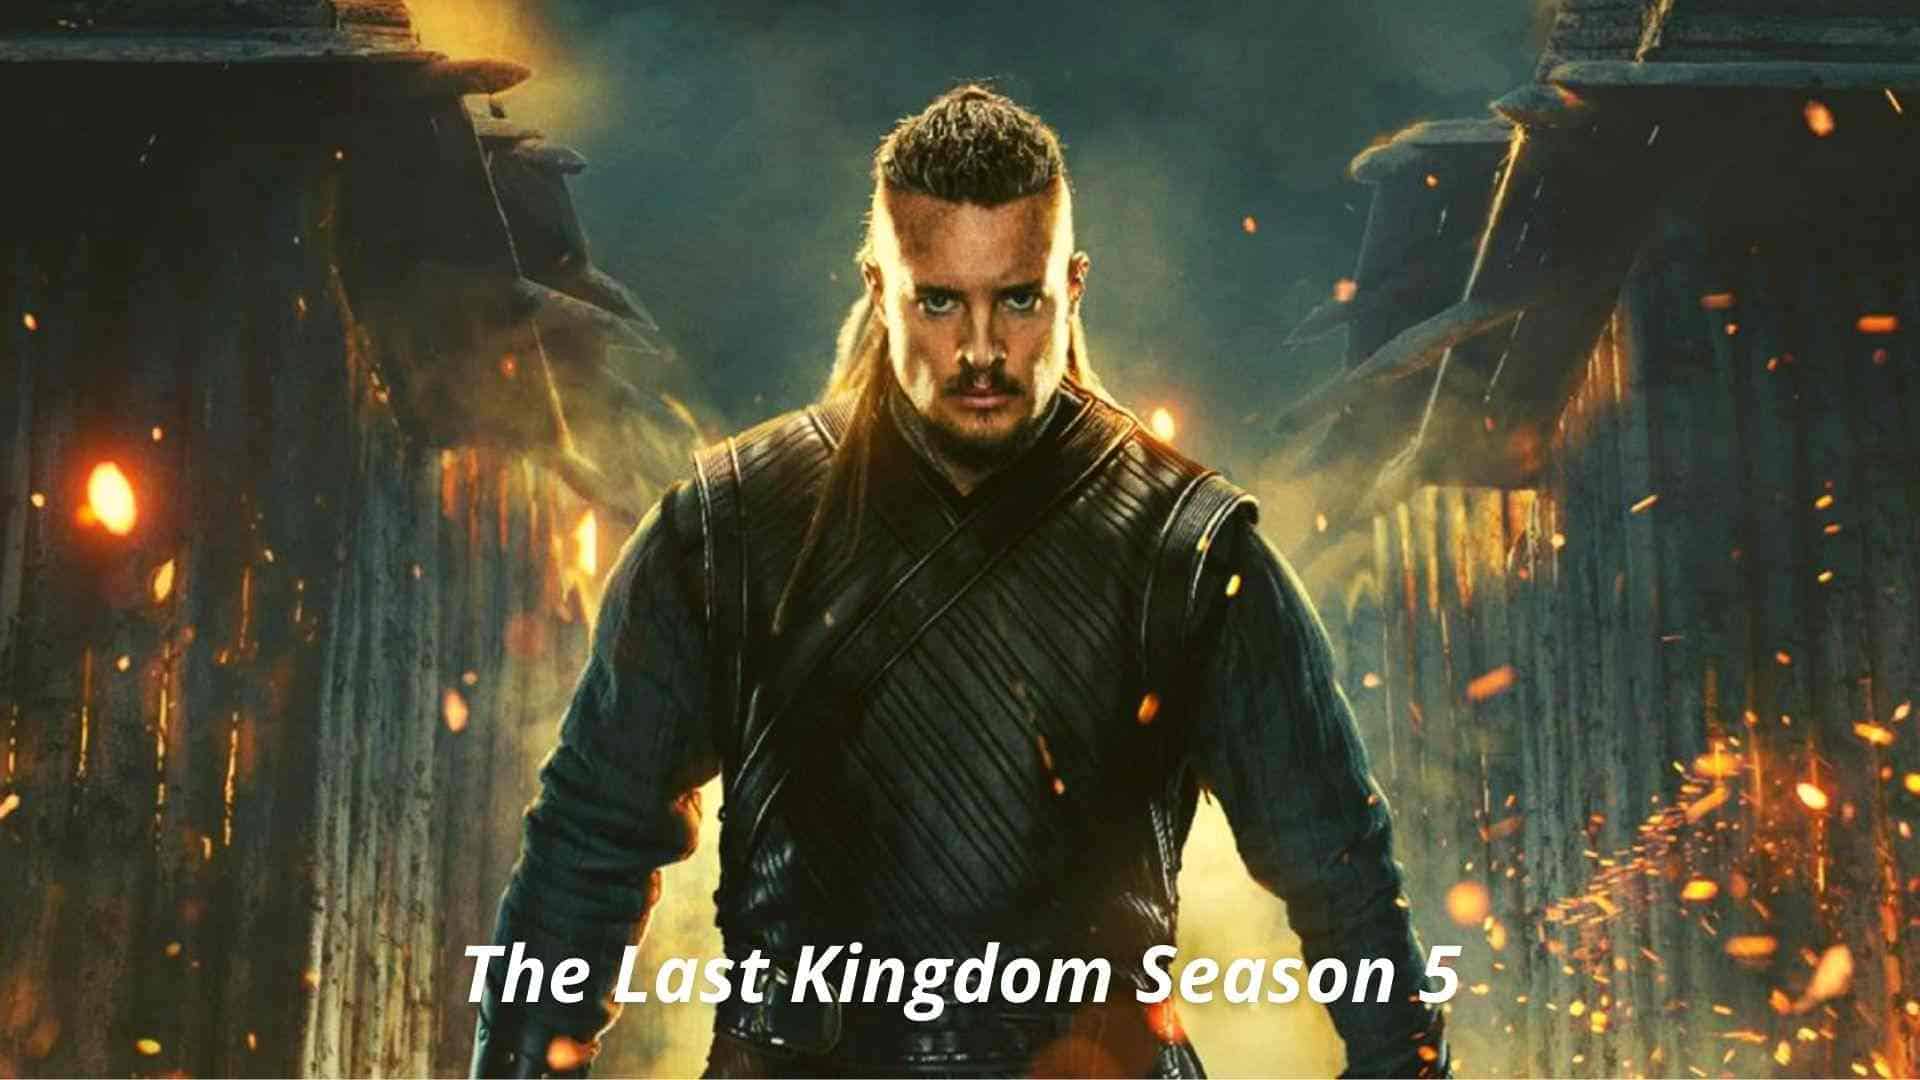 The Last Kingdom Season 5 Wallpapers